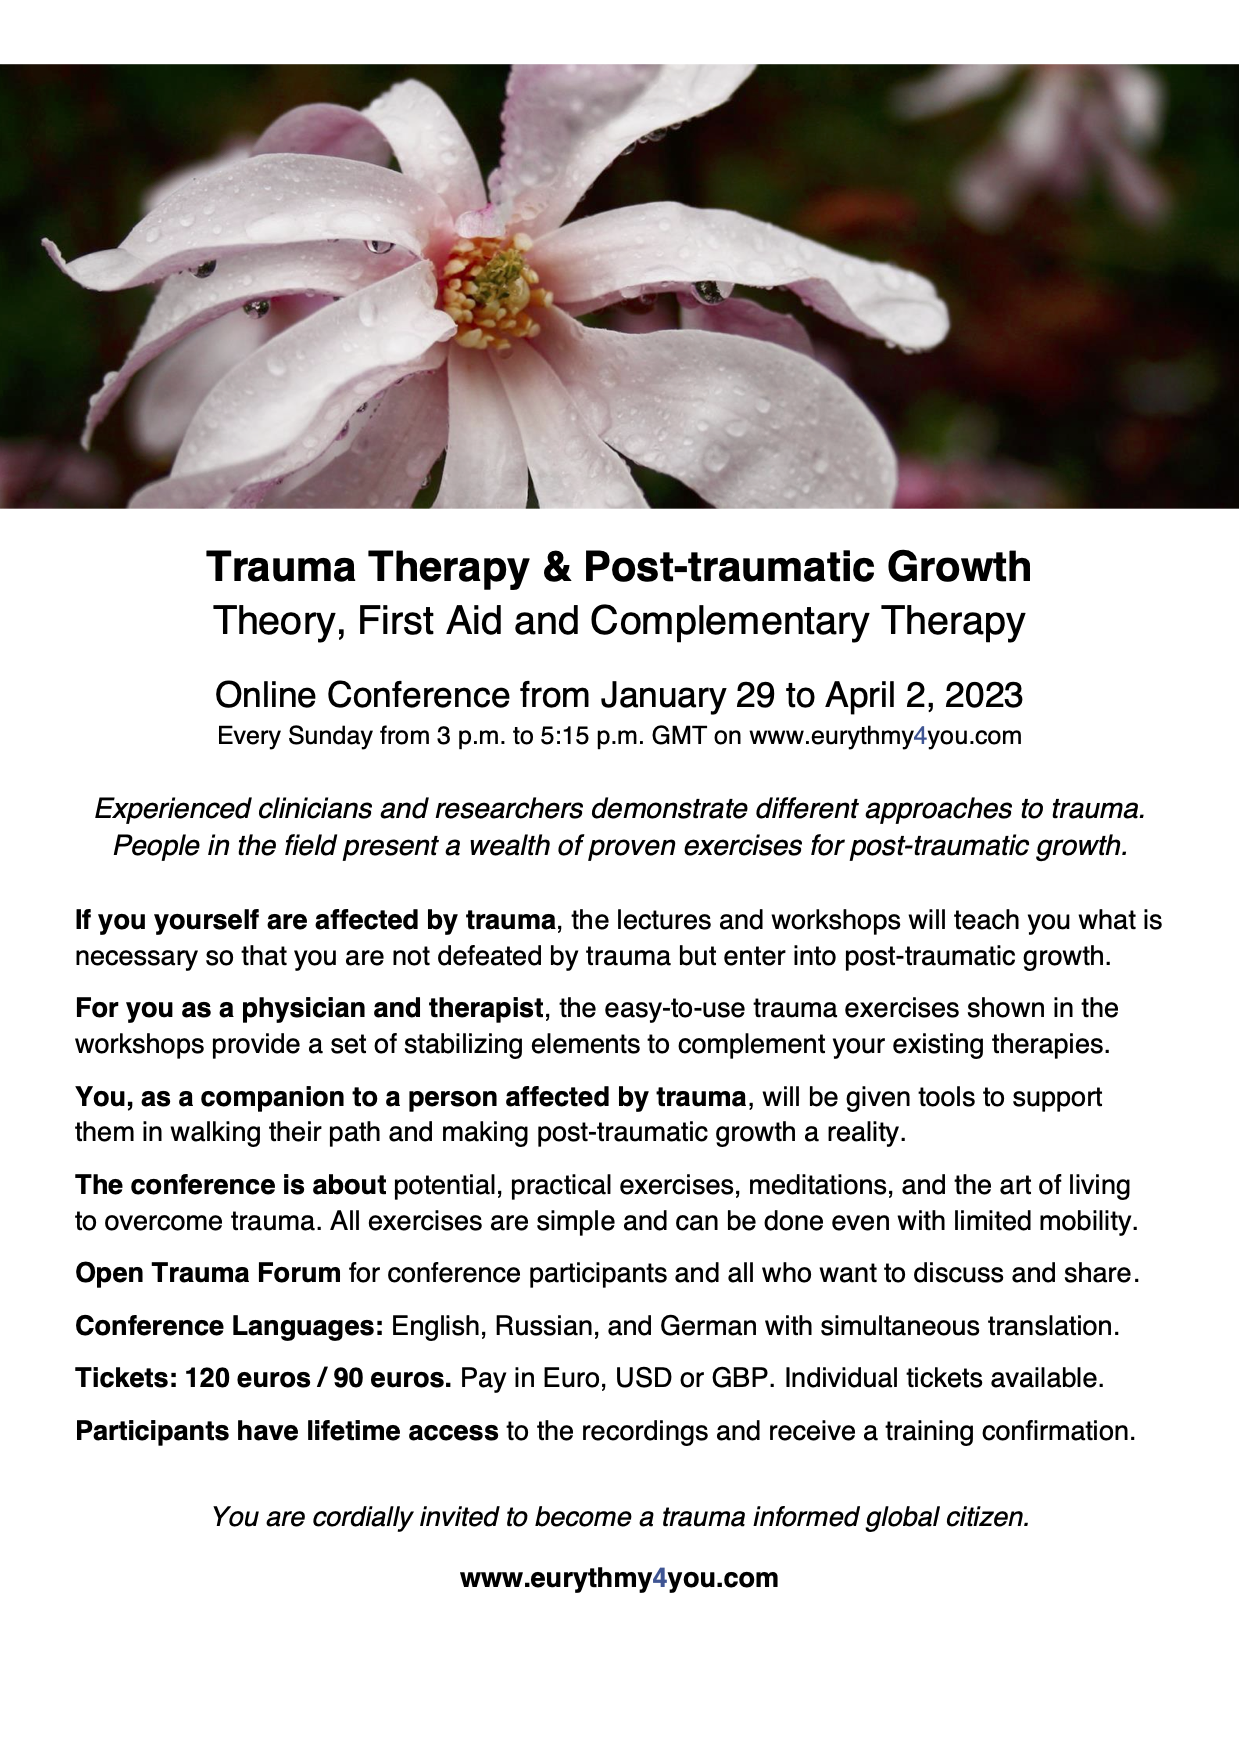 Trauma Conference 2023 - DINA4 EN Content Information